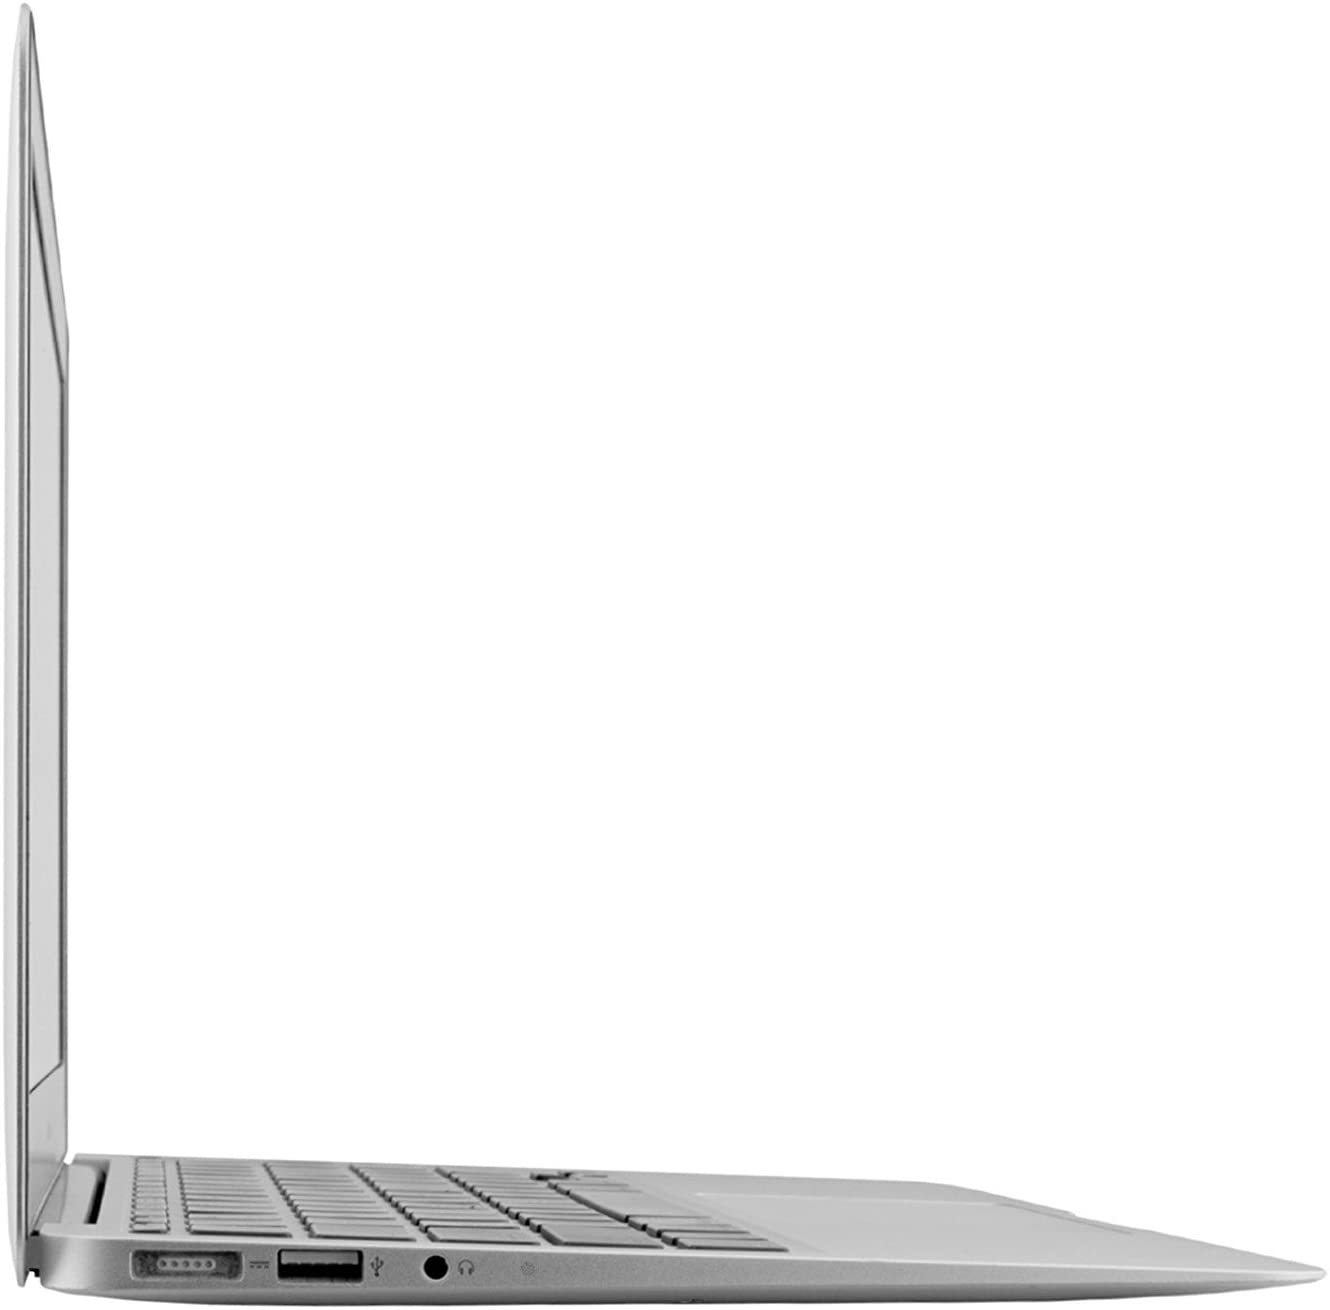 Apple Macbook Air MD711LL/B 11.6In Widescreen LED Backlit HD Laptop, Intel Dual-Core I5 up to 2.7Ghz, 4GB RAM, 128GB SSD, HD Camera, USB 3.0, 802.11Ac, Bluetooth, Mac OS X (Renewed)